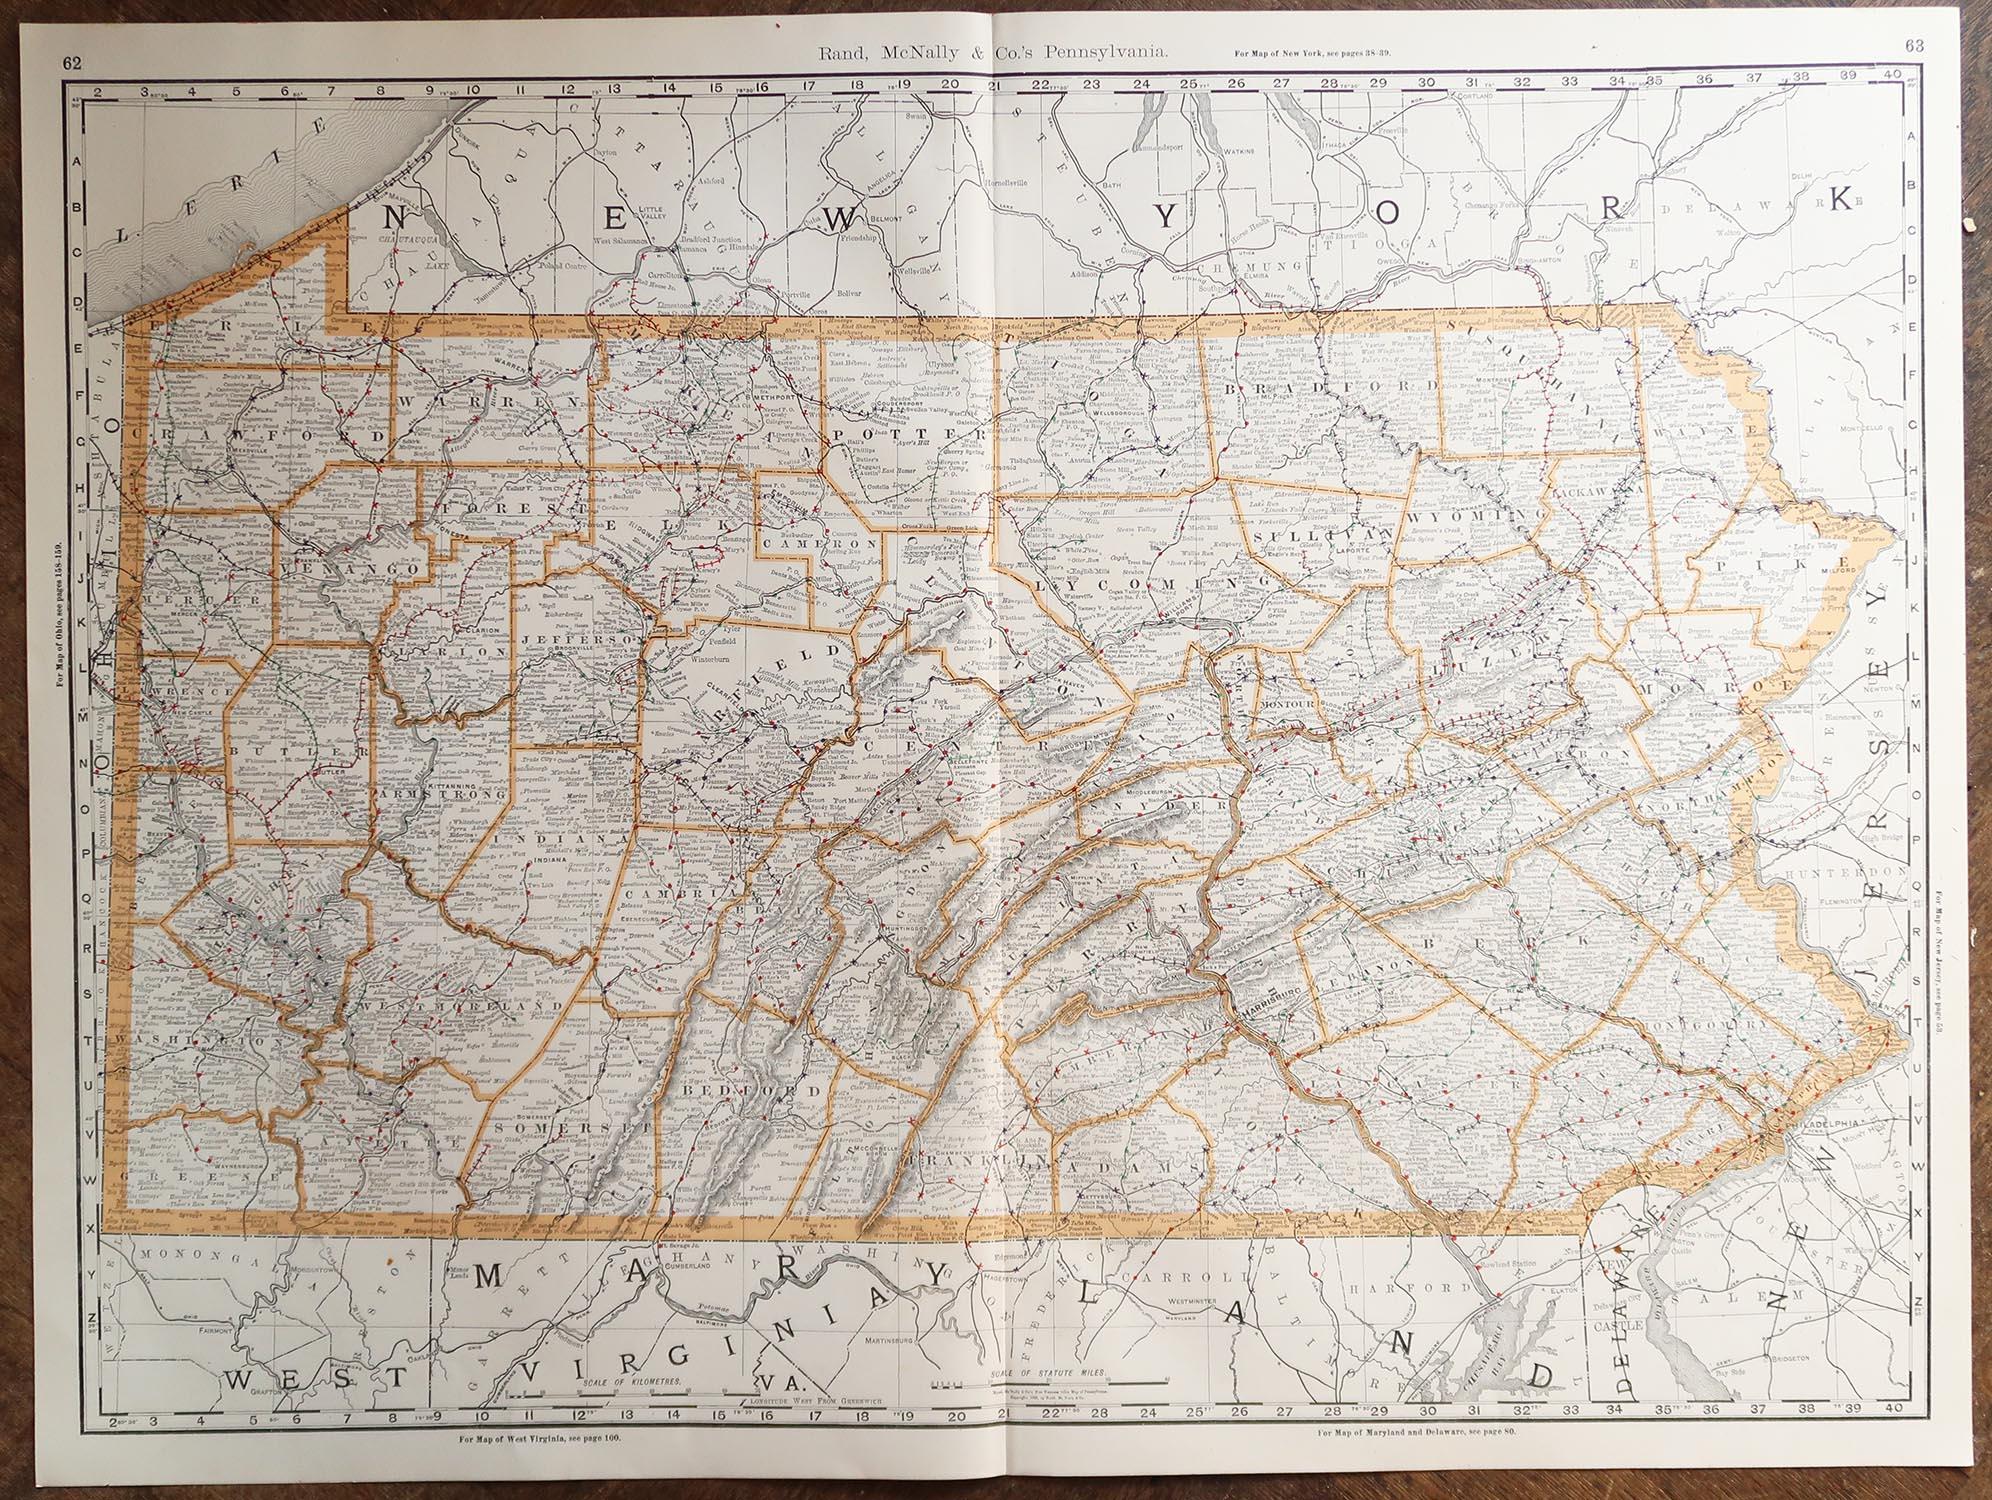 pennsylvania on usa map